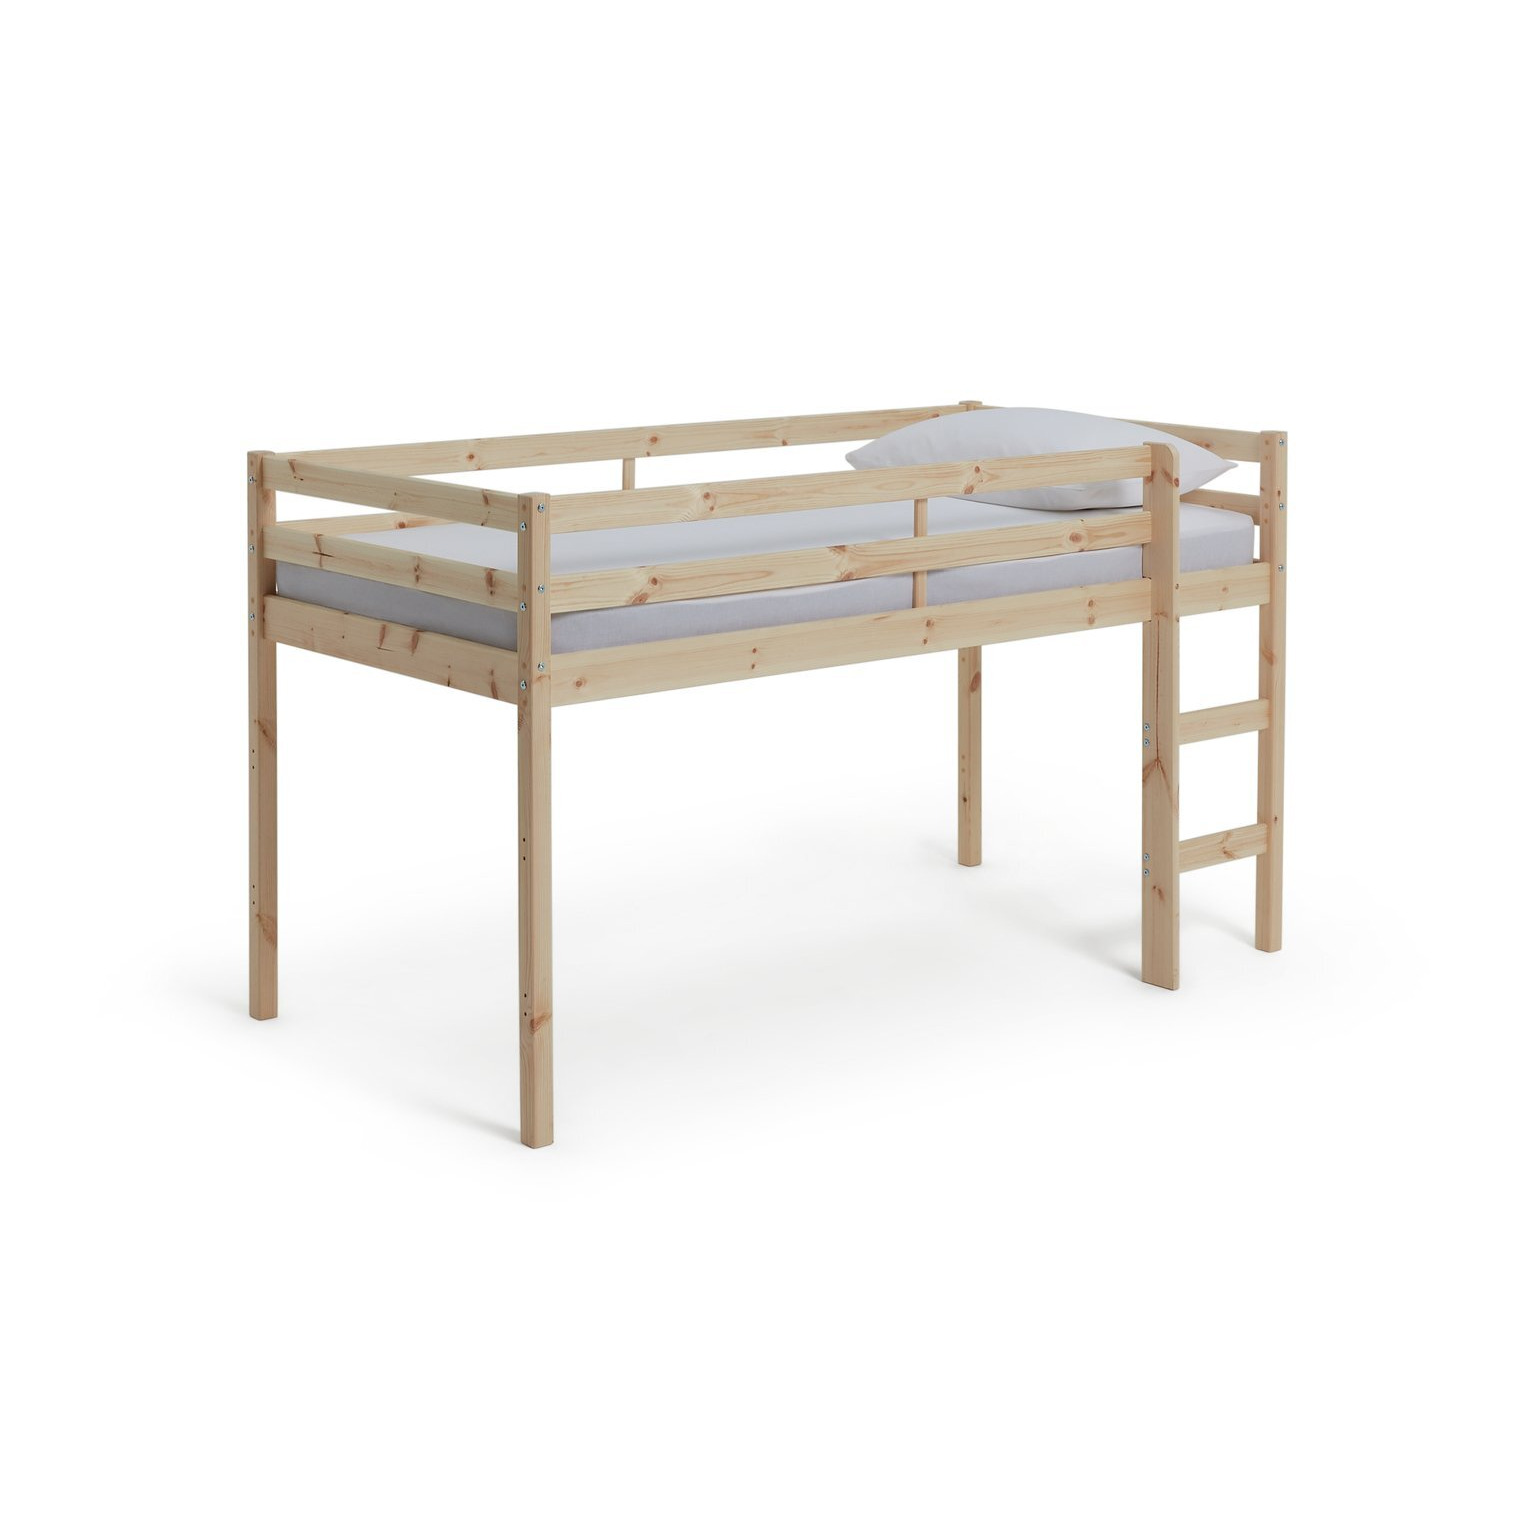 Argos Home Kaycie Mid Sleeper Single Bed Frame - Pine - image 1